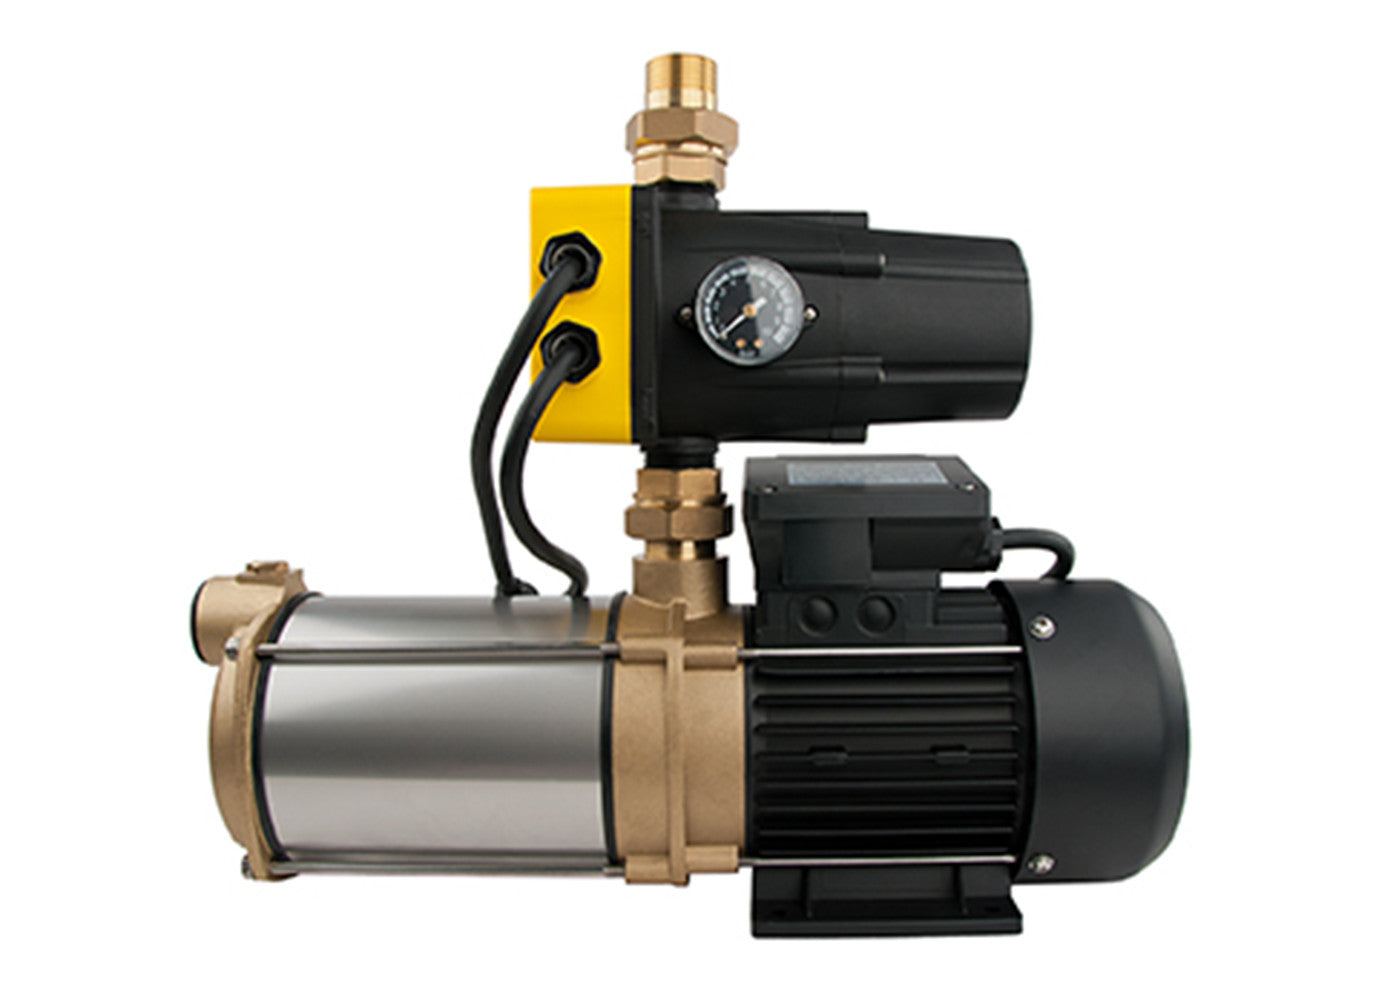 Hauswasserautomat CPS 25-4MB/Kit 05 OPTIMATIC für das Haus